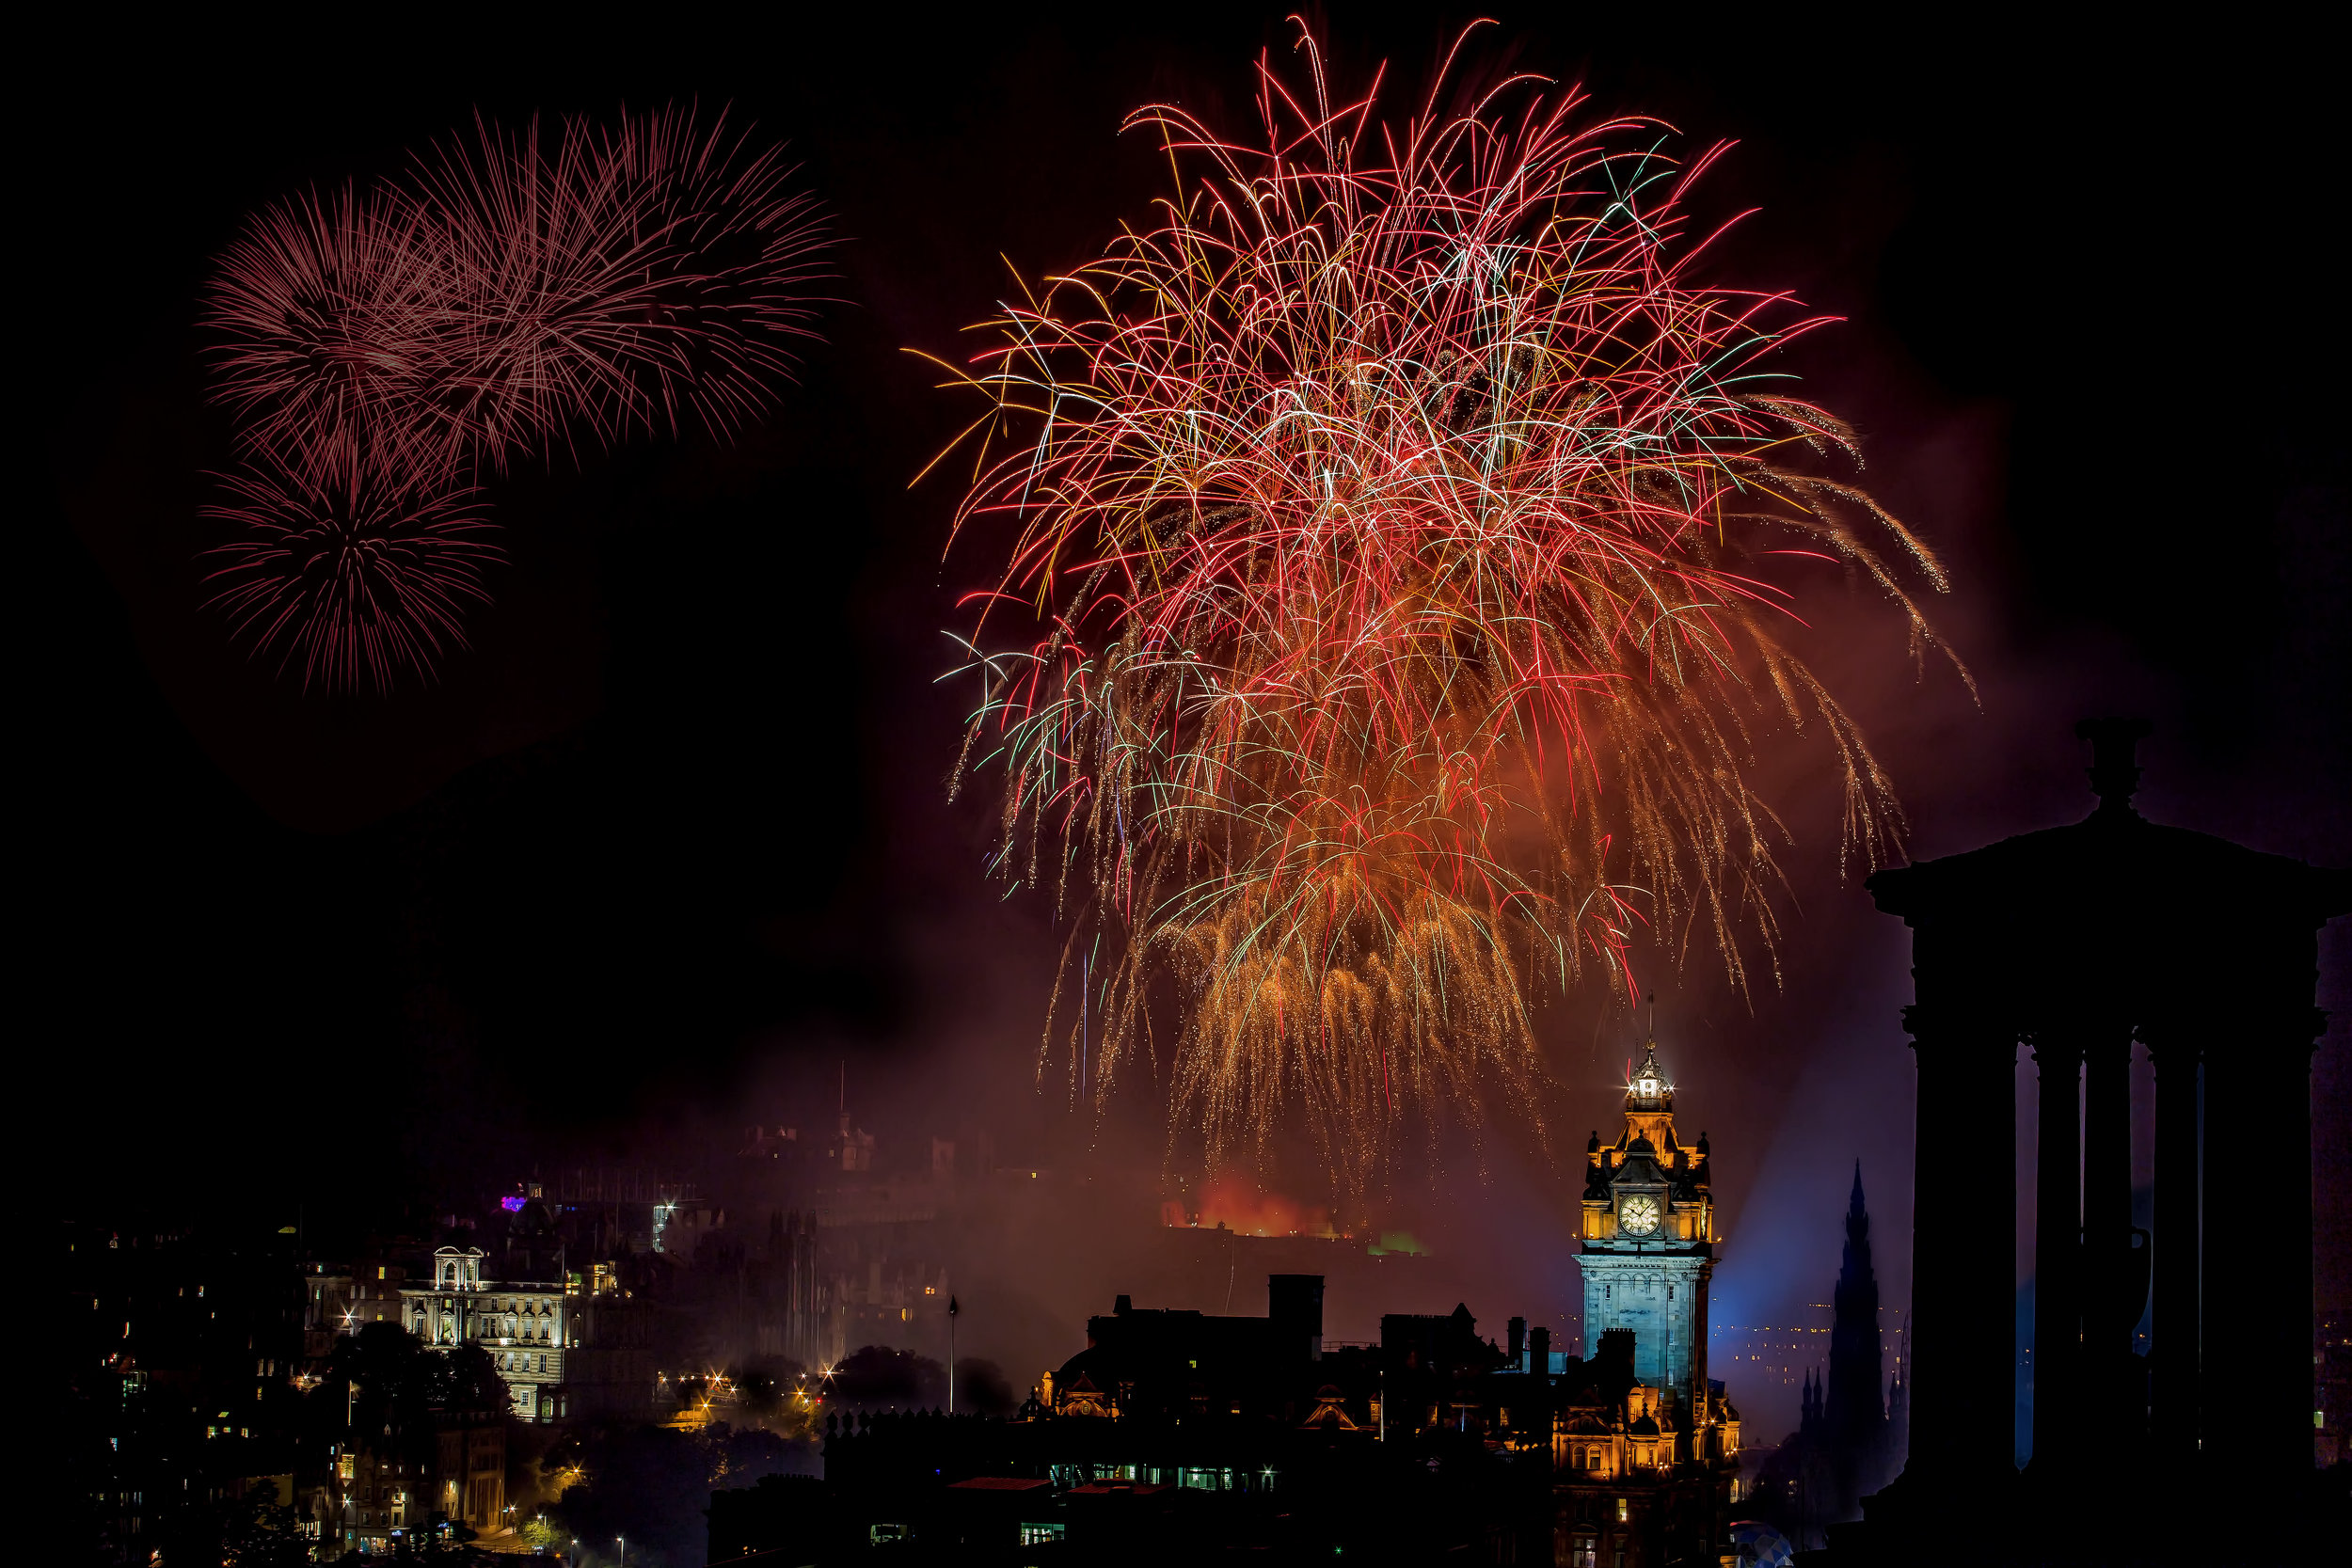 Edinburgh - End of the Festival Fireworks